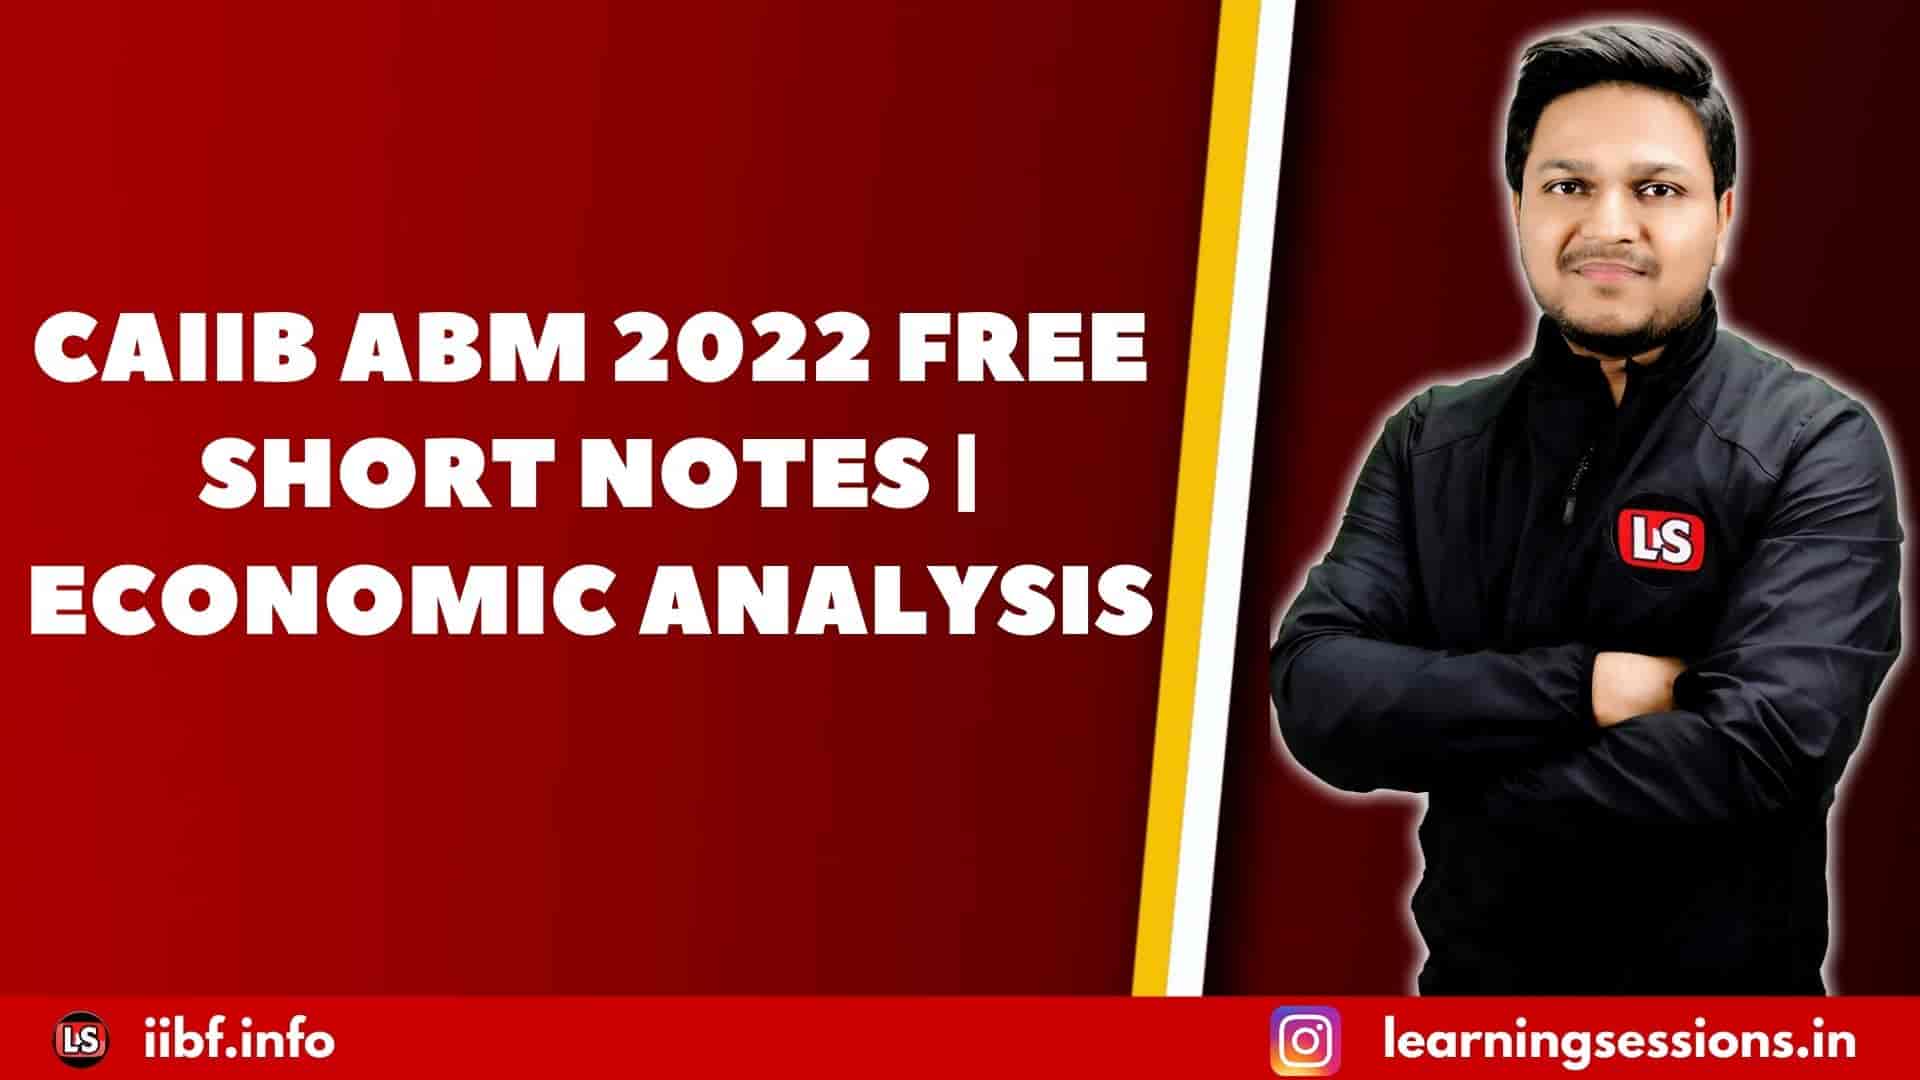 CAIIB ABM 2022 FREE SHORT NOTES | ECONOMIC ANALYSIS